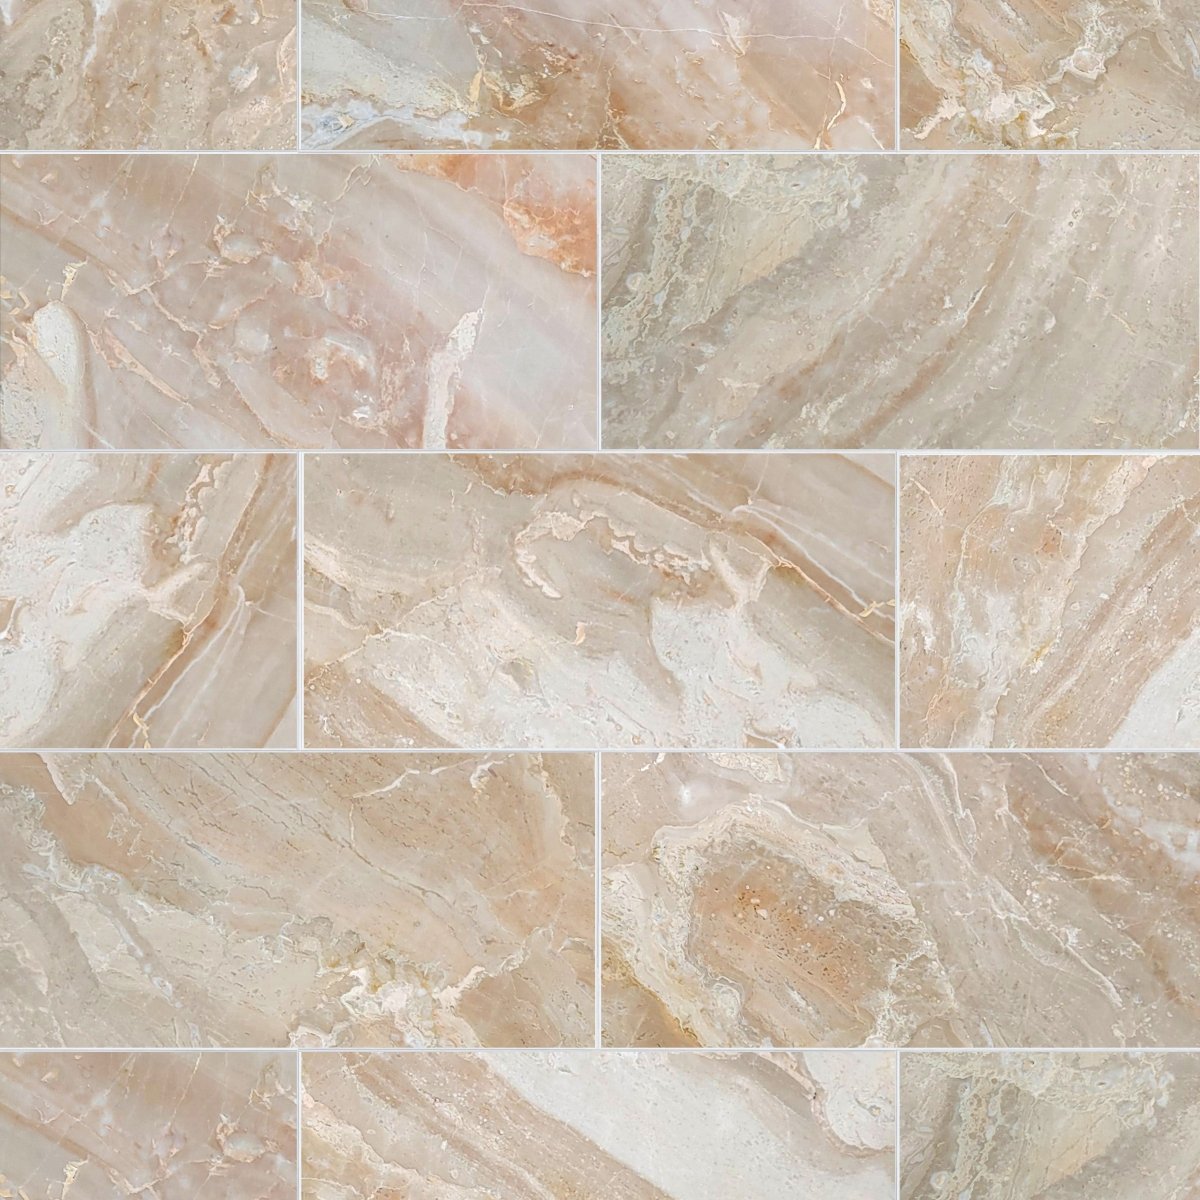 Breccia Oniciata Polished Marble Field Tile 6''x12''x3/8''